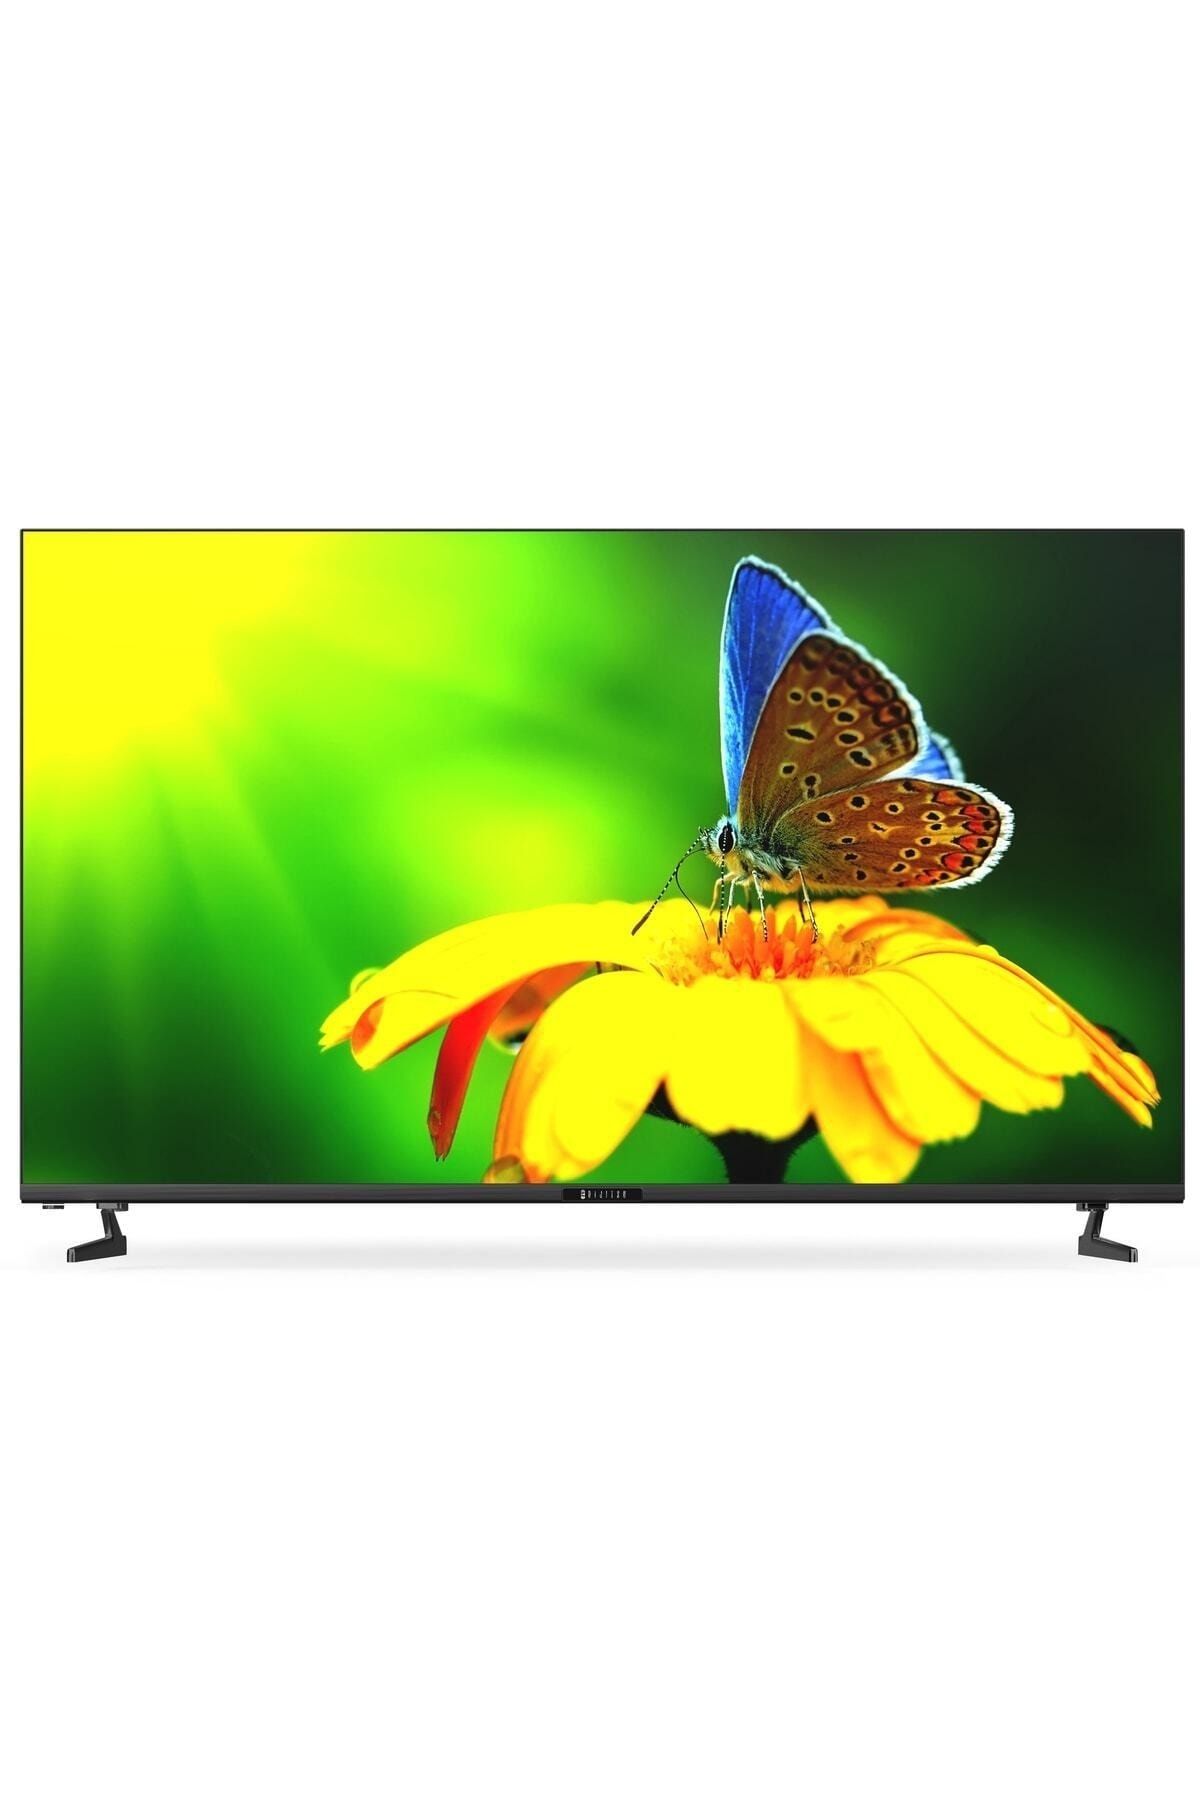 Dijitsu 50ds8500 50" Smart Ultra Hd Led Tv